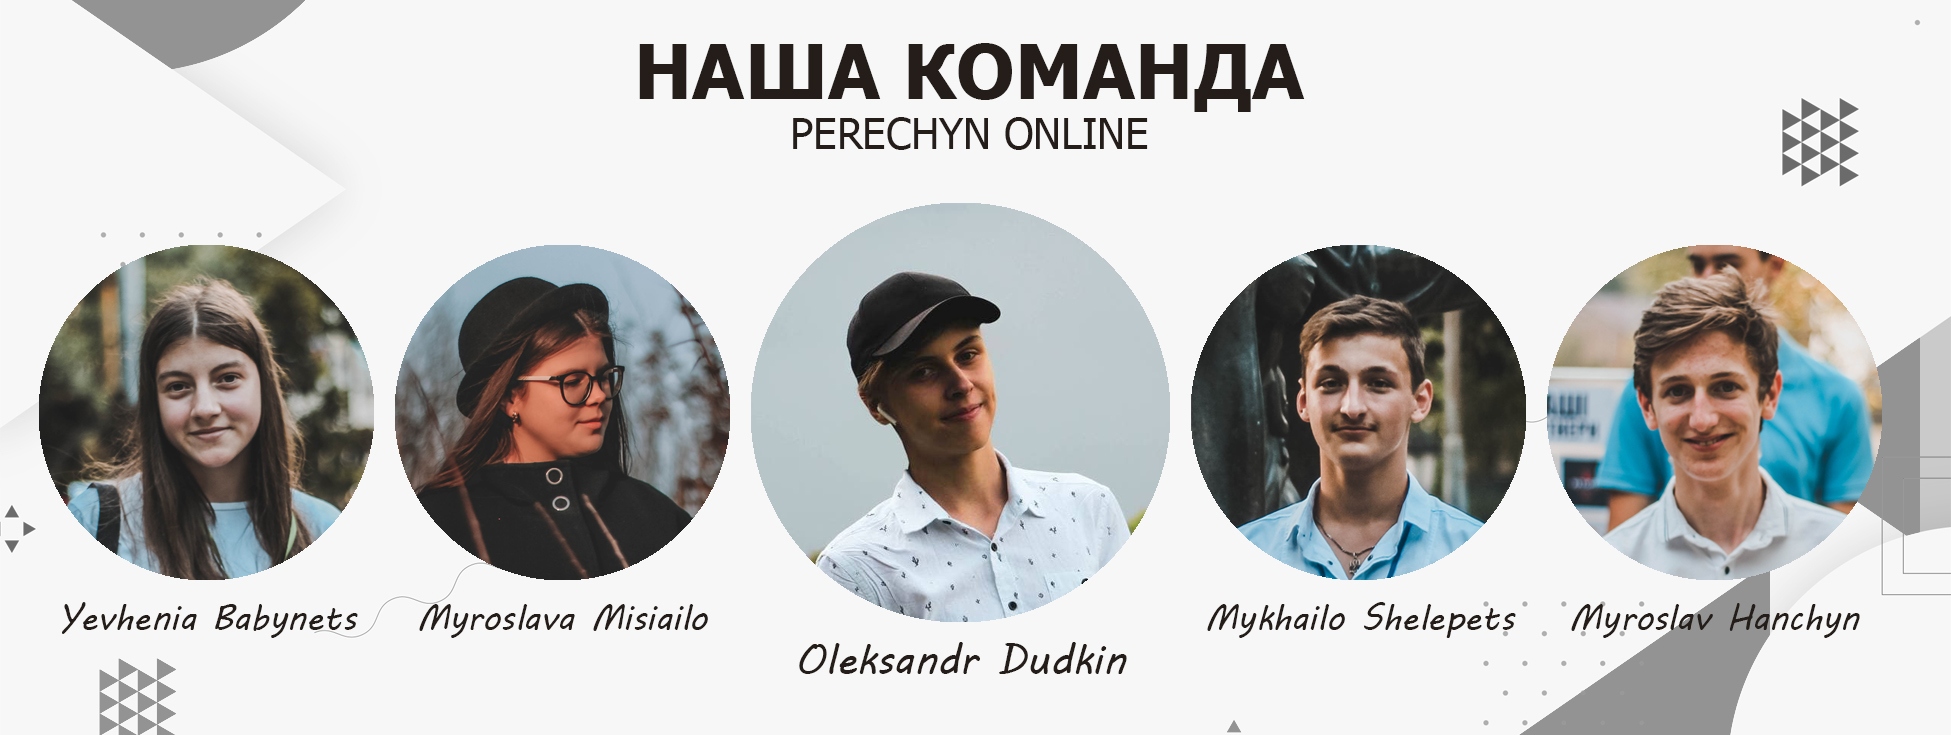 2 Perechyn Online